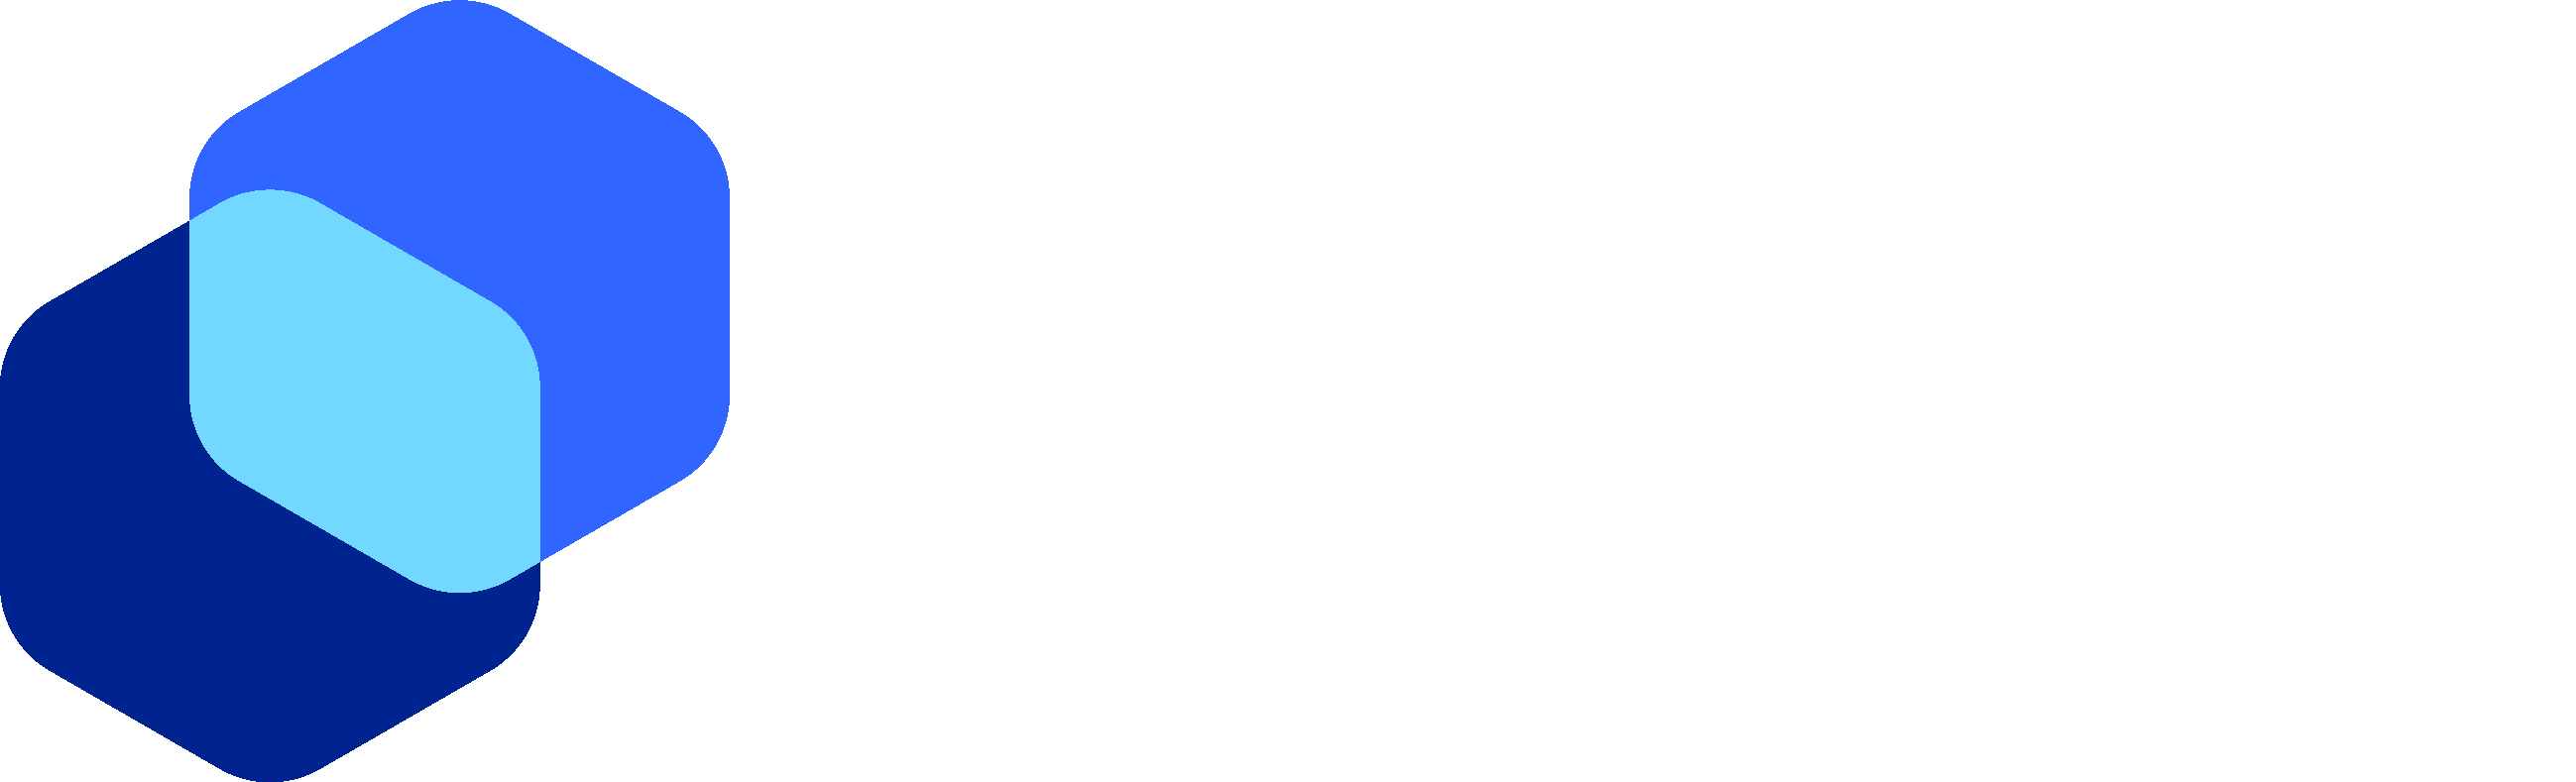 Logotipo da CAEFE